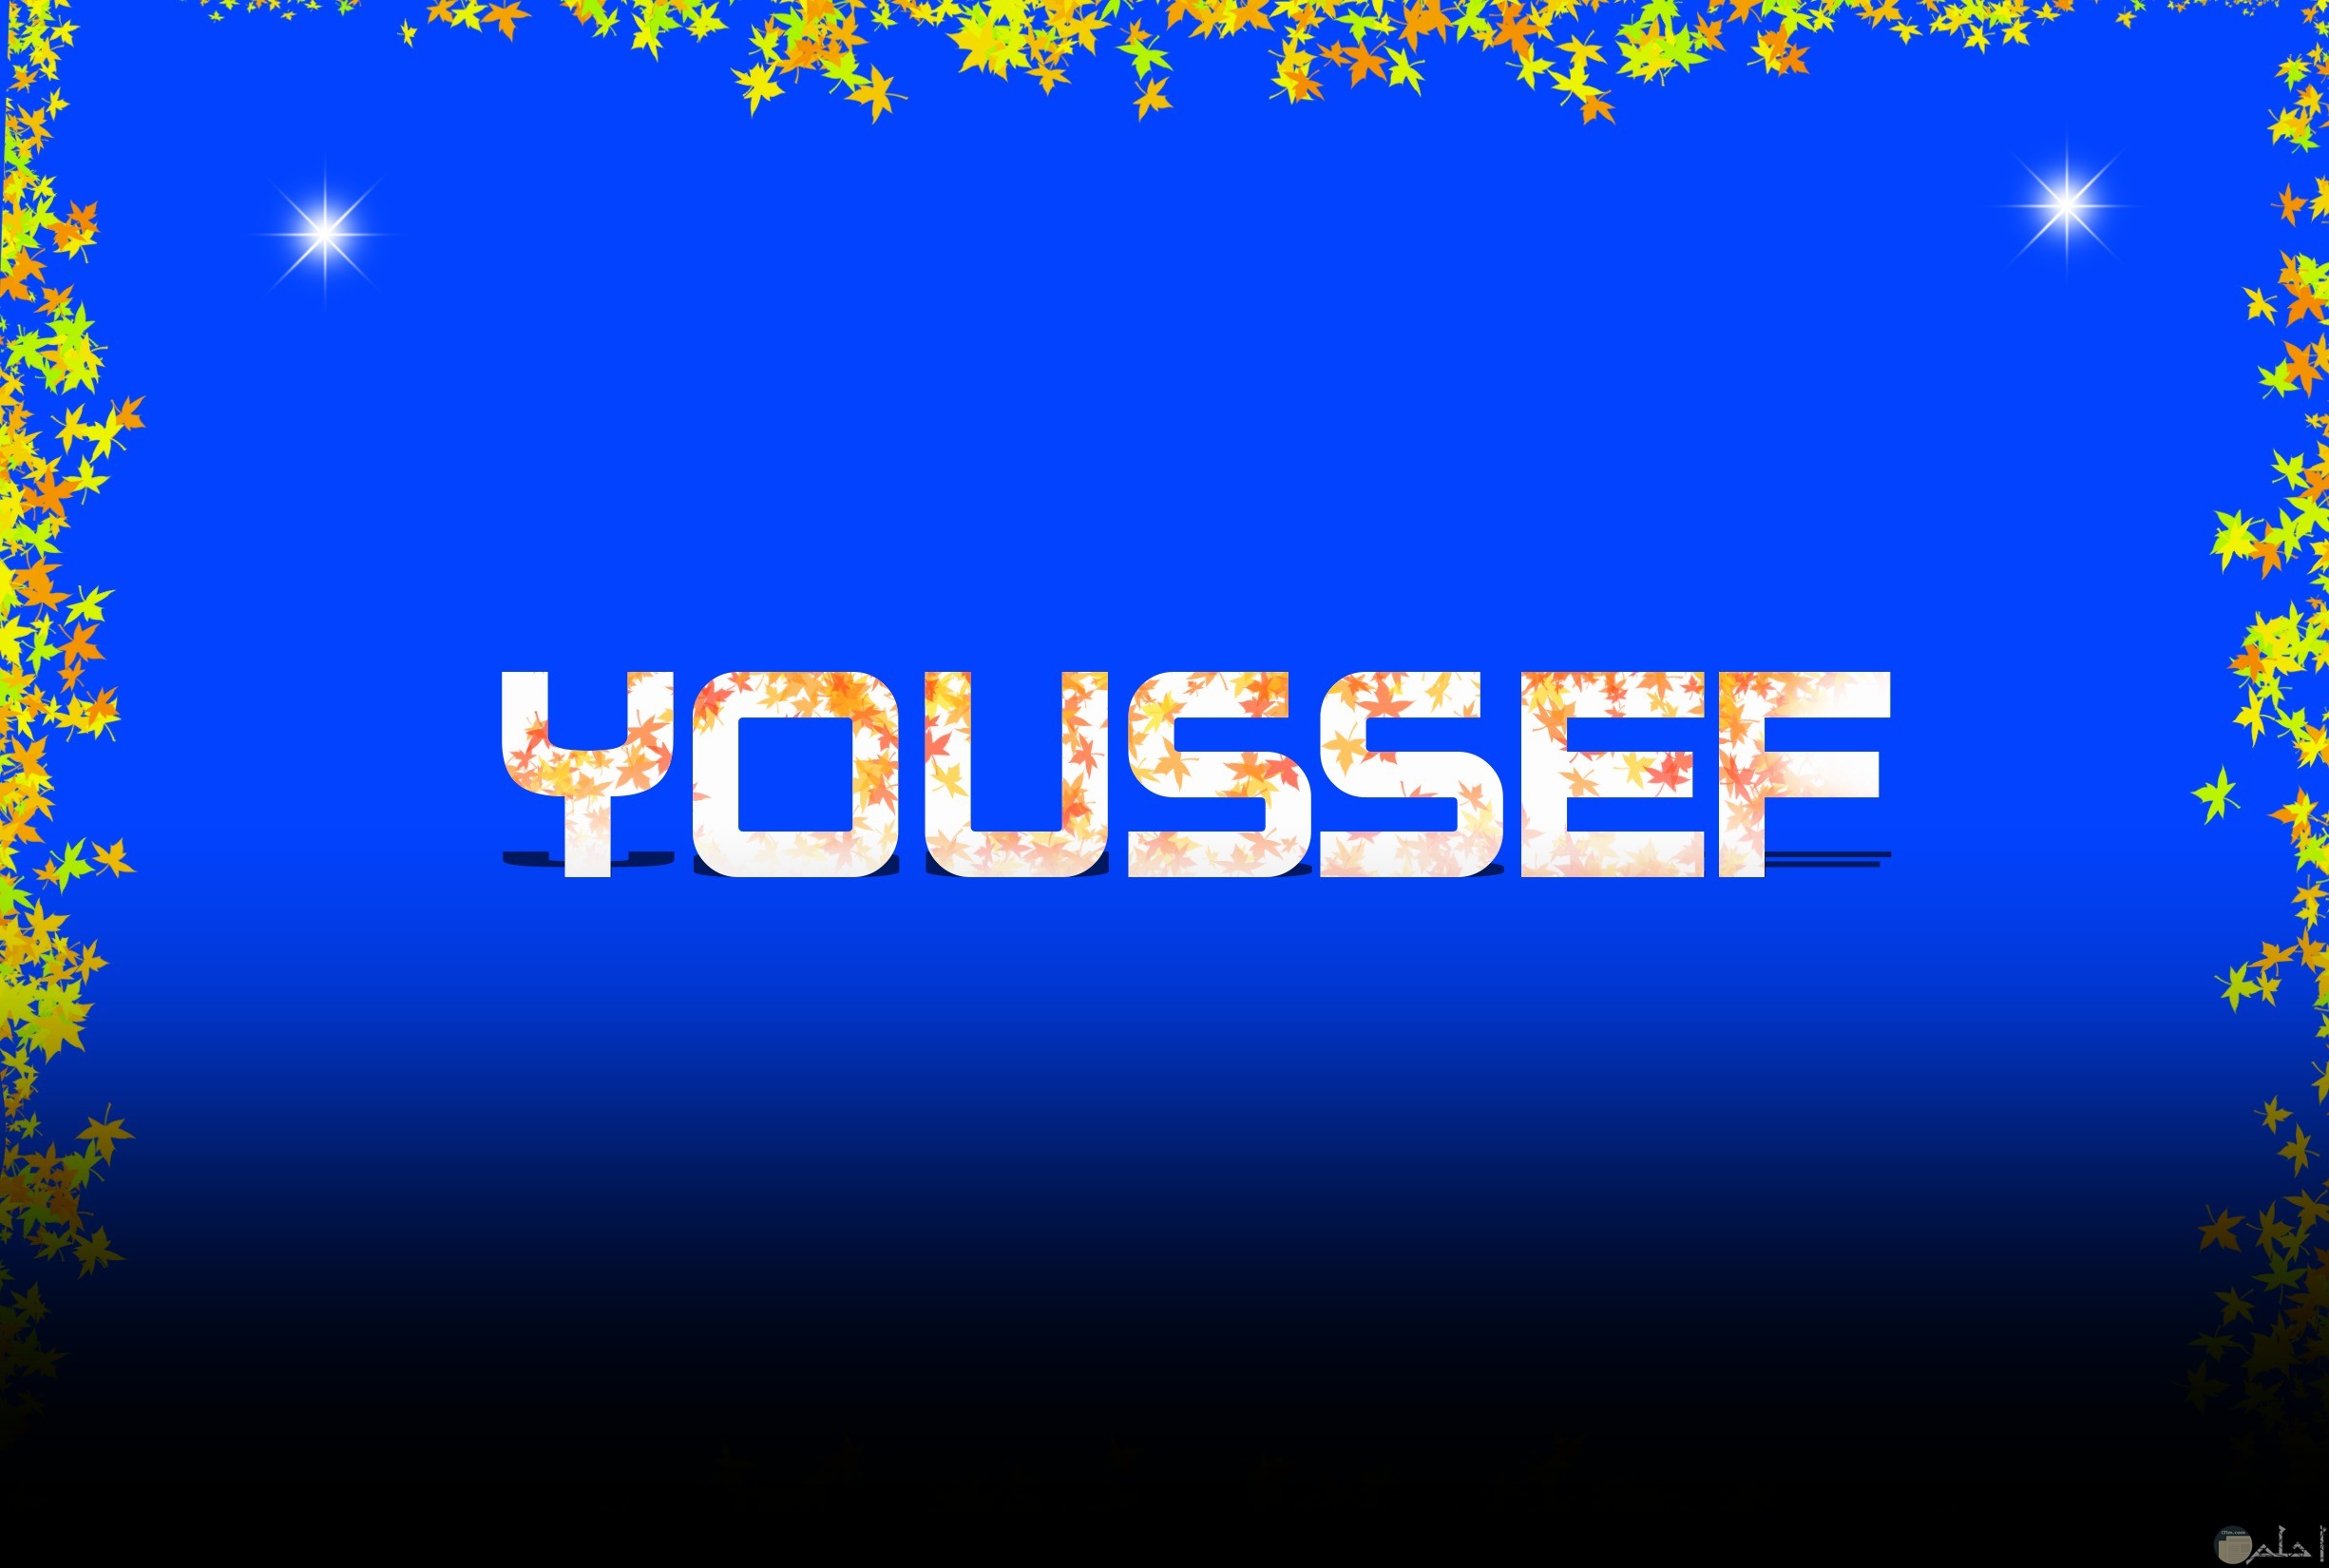 youssef مكتوبه على خلفية زرقاء